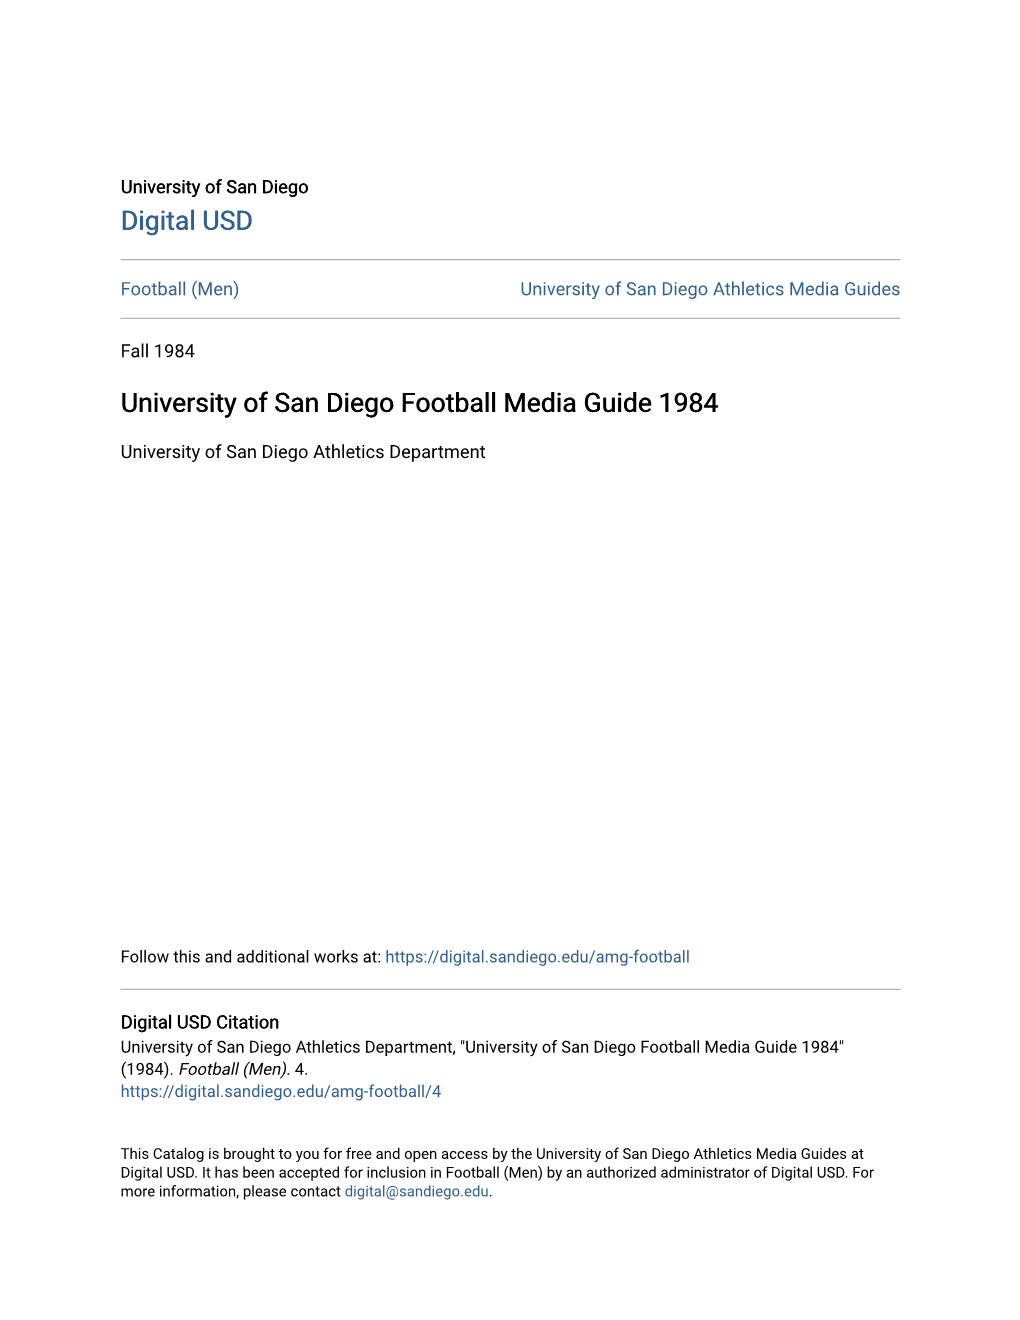 University of San Diego Football Media Guide 1984